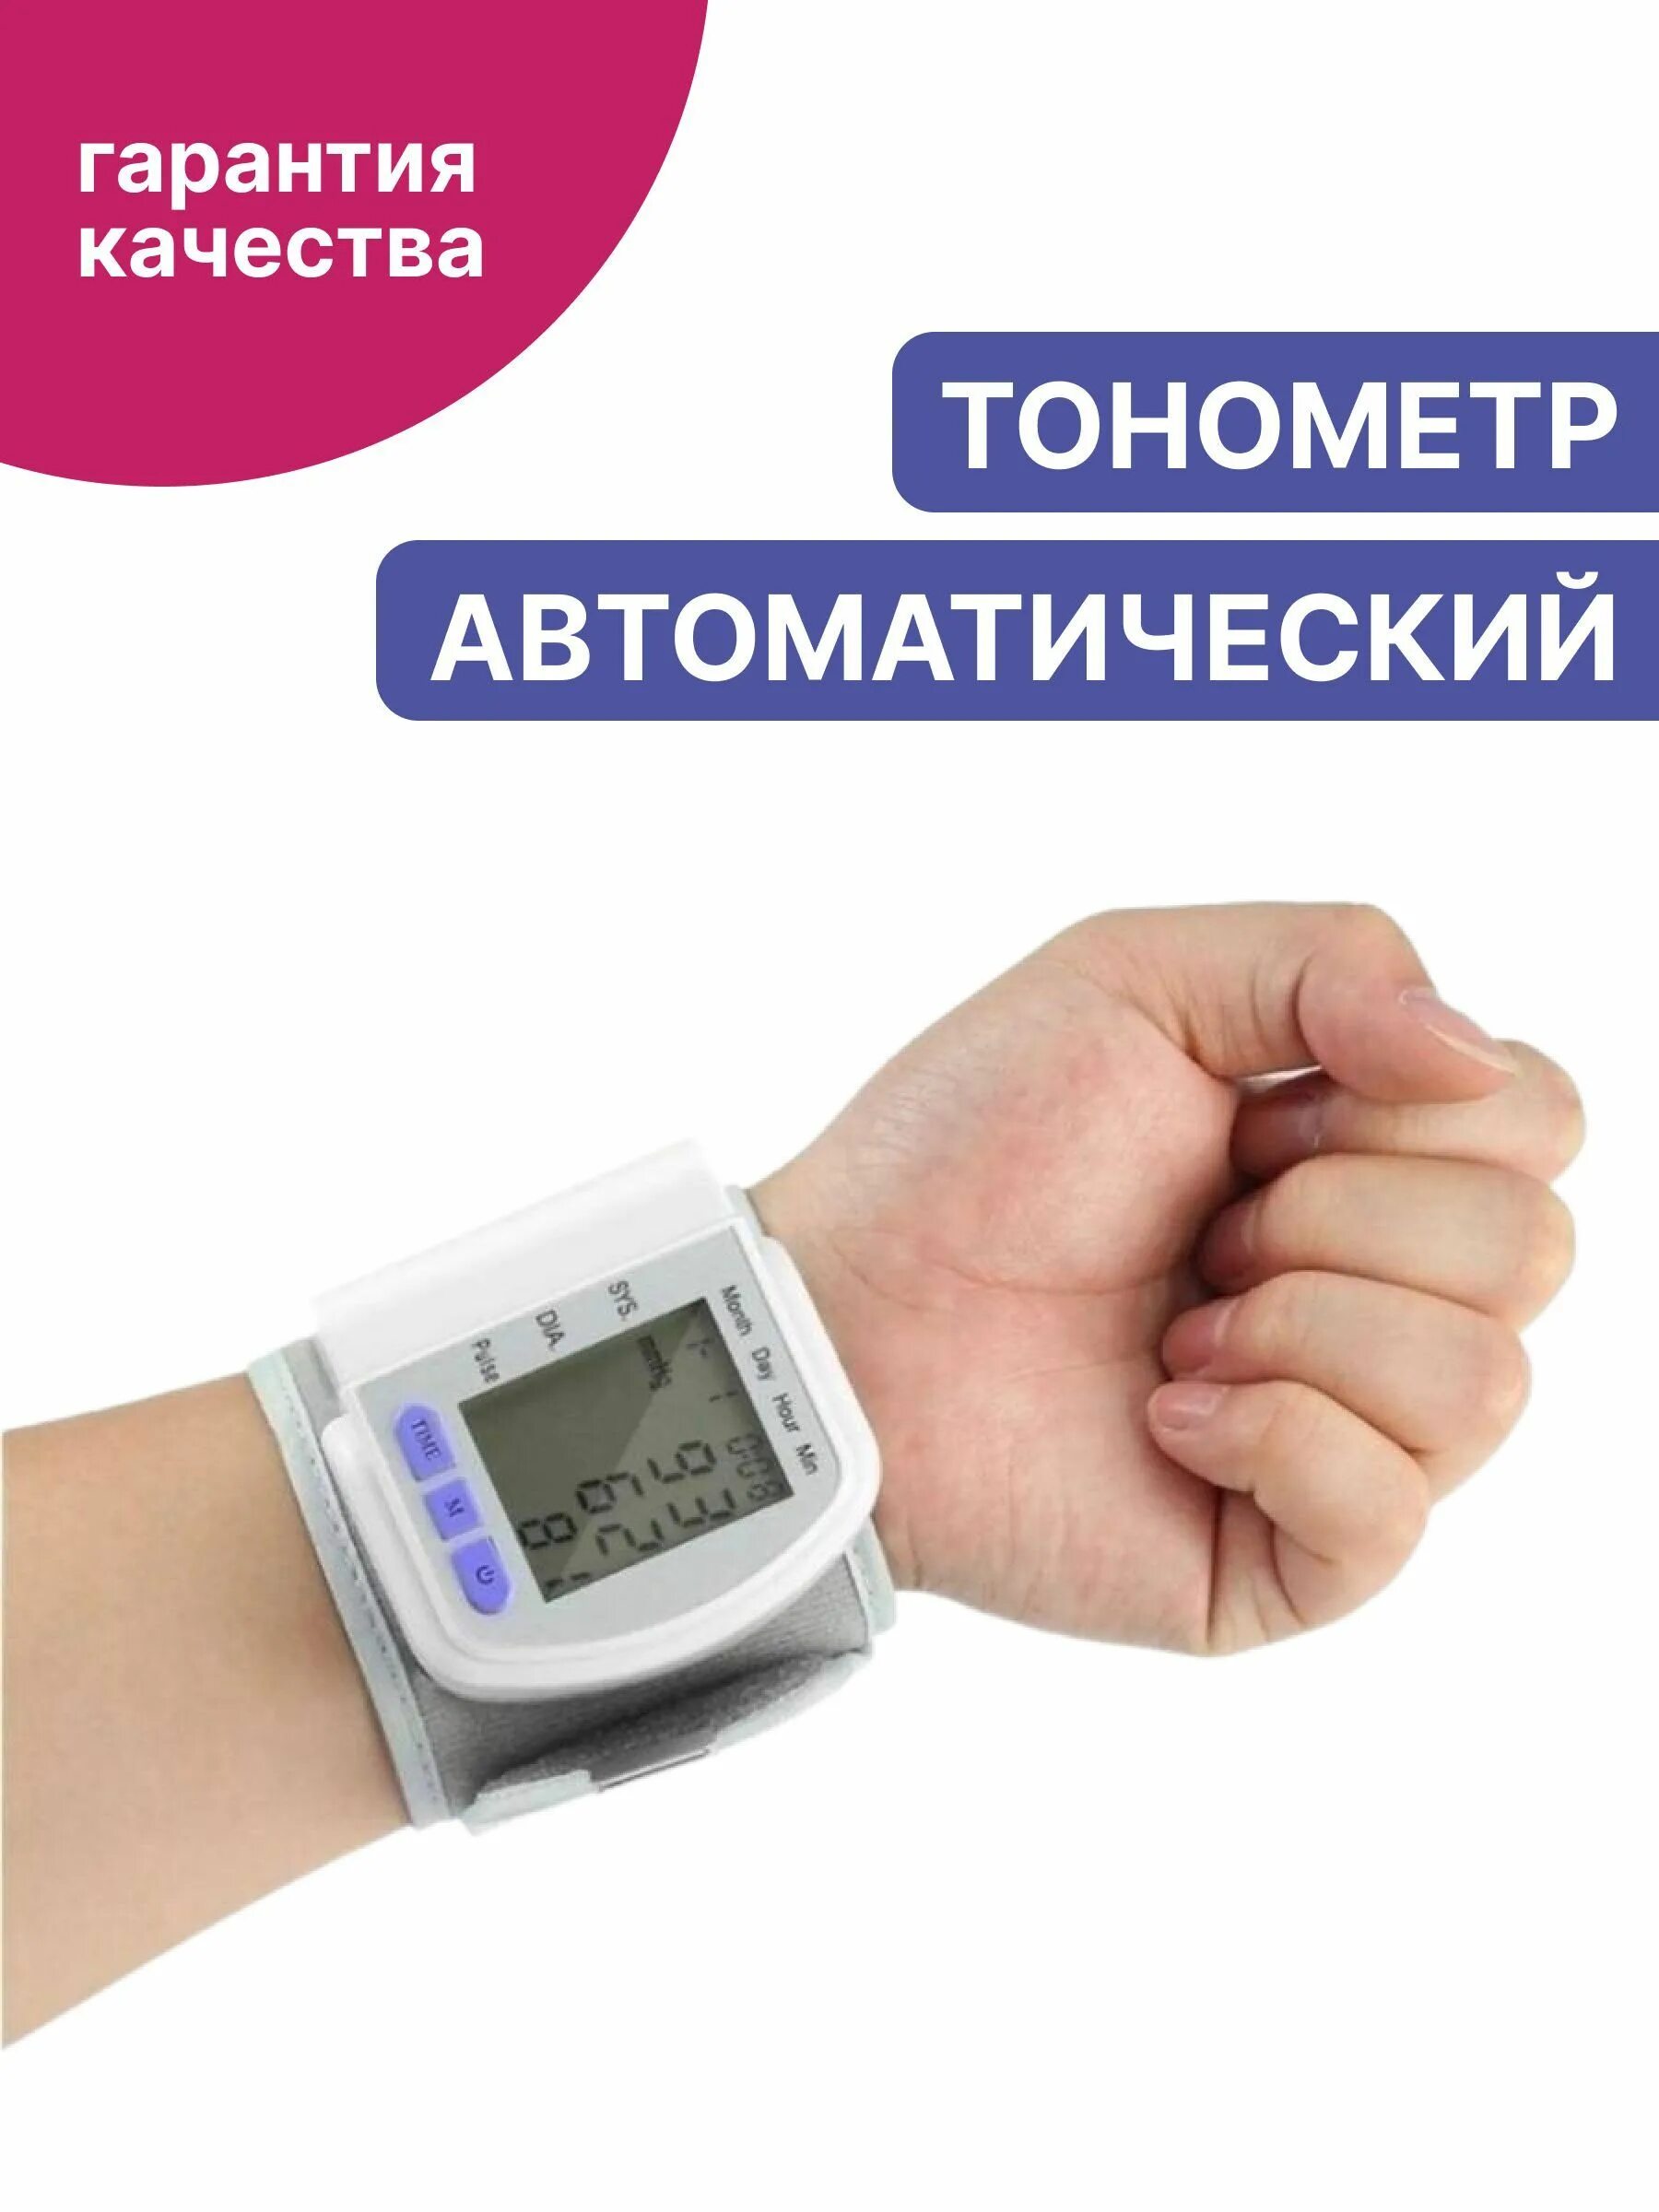 Blood Pressure Monitor CK-102s. Тонометр u-Kiss Wrist Blood Pressure Monitor device. Тонометр автоматический CK-102s на запястье, электронный. Цифровой тонометр Blood Pressure Monitor CK-102s. Тонометр автоматический на запястье лучшие